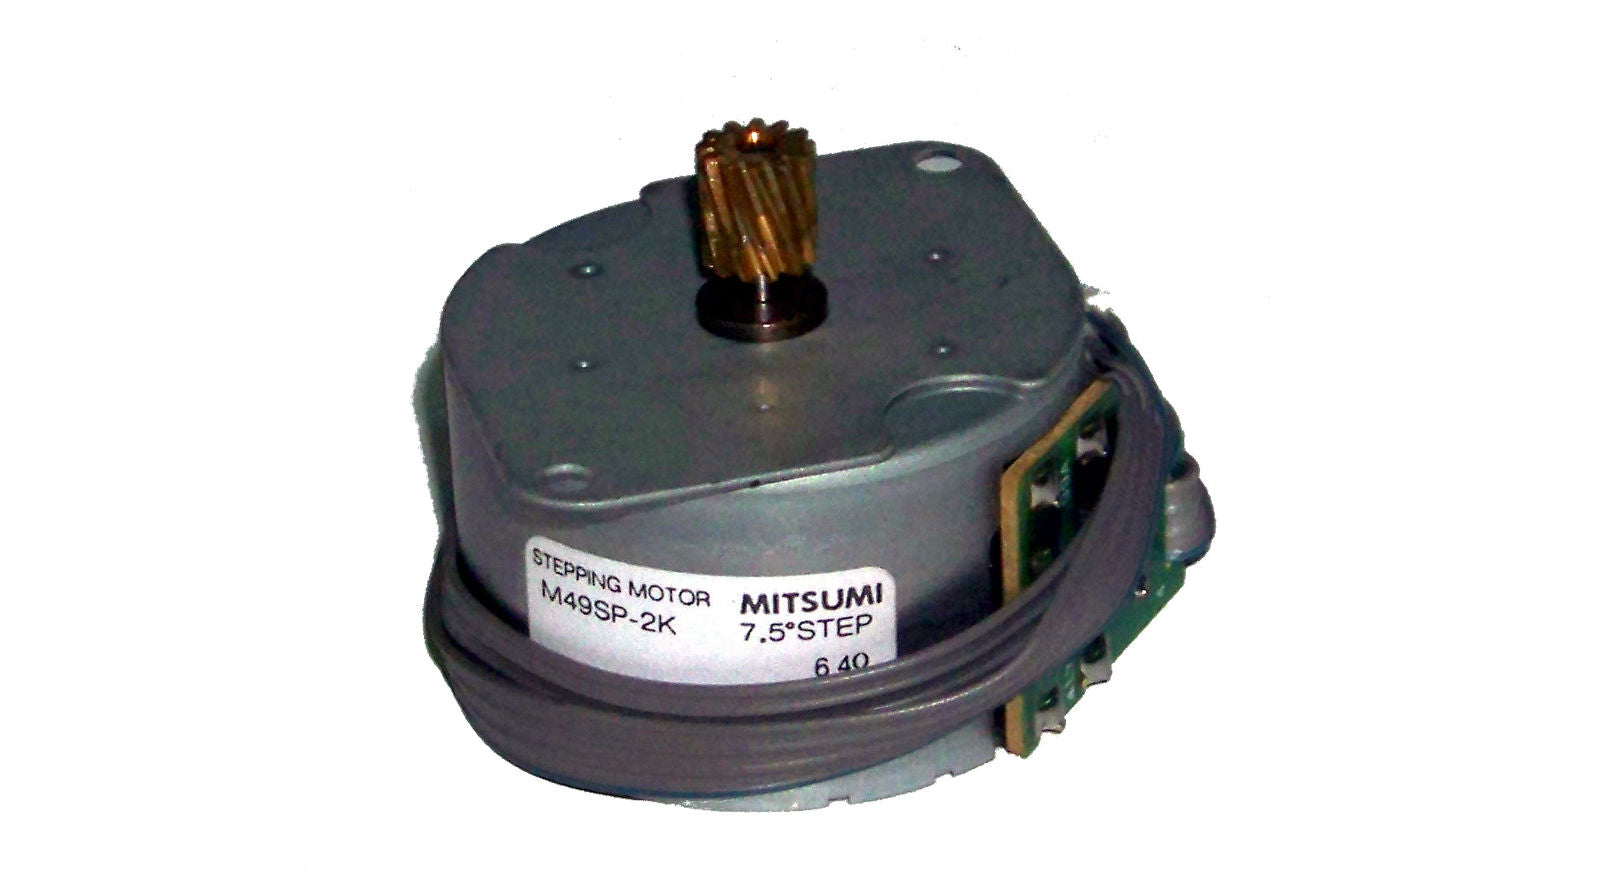 Mitsumi Fax Machine Stepping Motor (M49SP-2K REF)